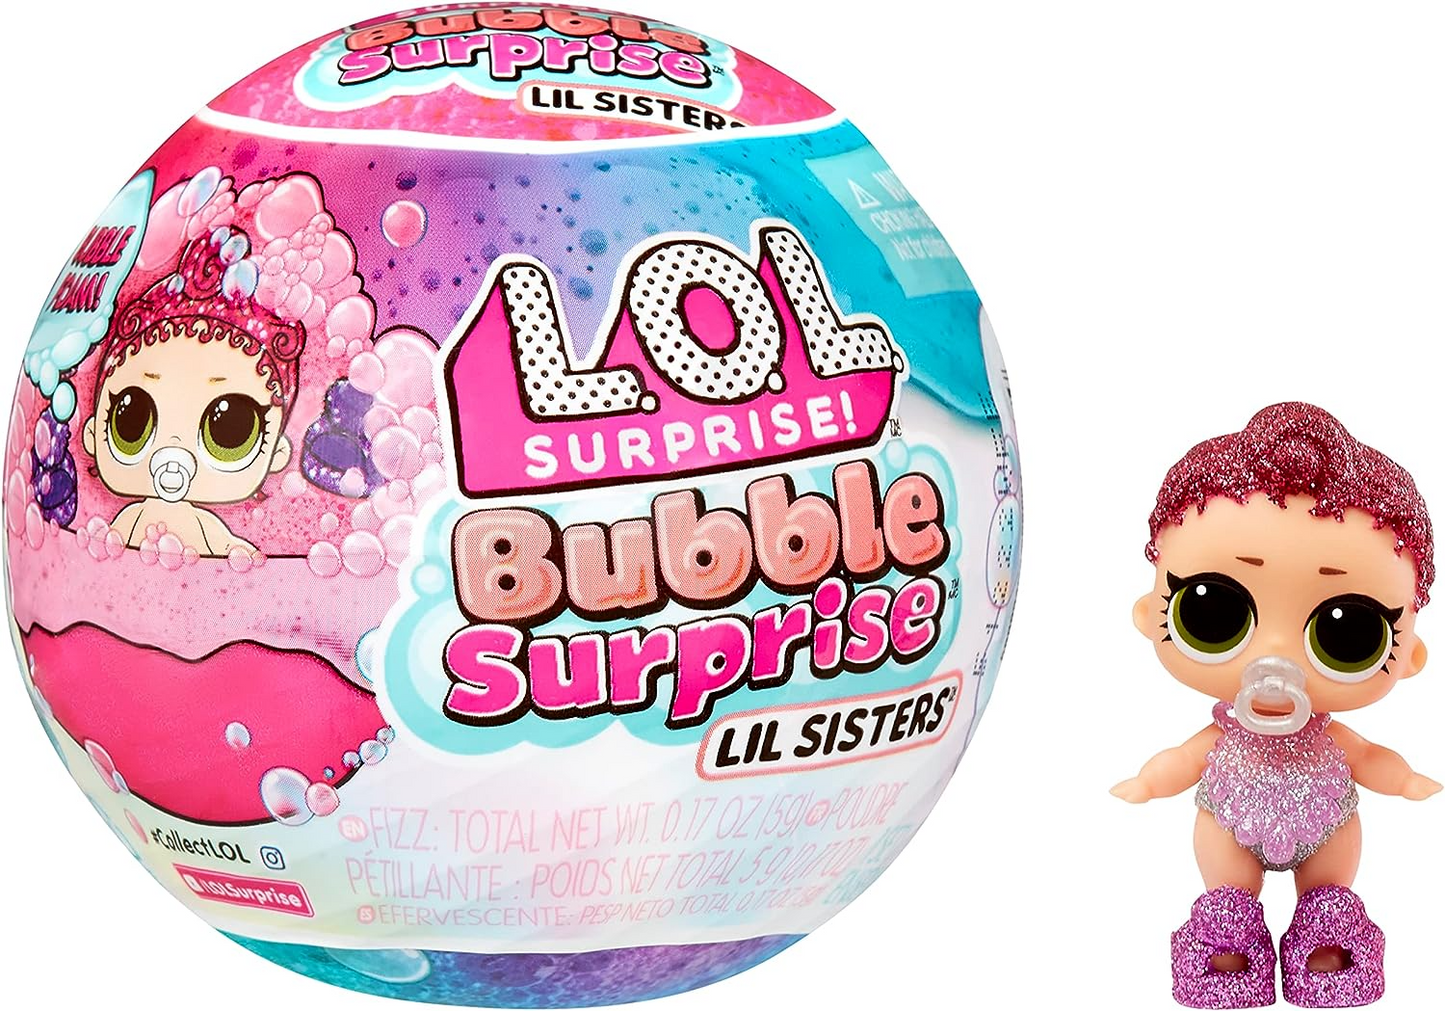 LOL Surprise Bubble Surprise Lil Sisters - VARIEDADE ALEATÓRIA - Boneca colecionável, irmãzinha, surpresas, acessórios, Bubble Surprise Unboxing e Bubble Foam Reaction - Ótimo para crianças de 4 anos ou mais